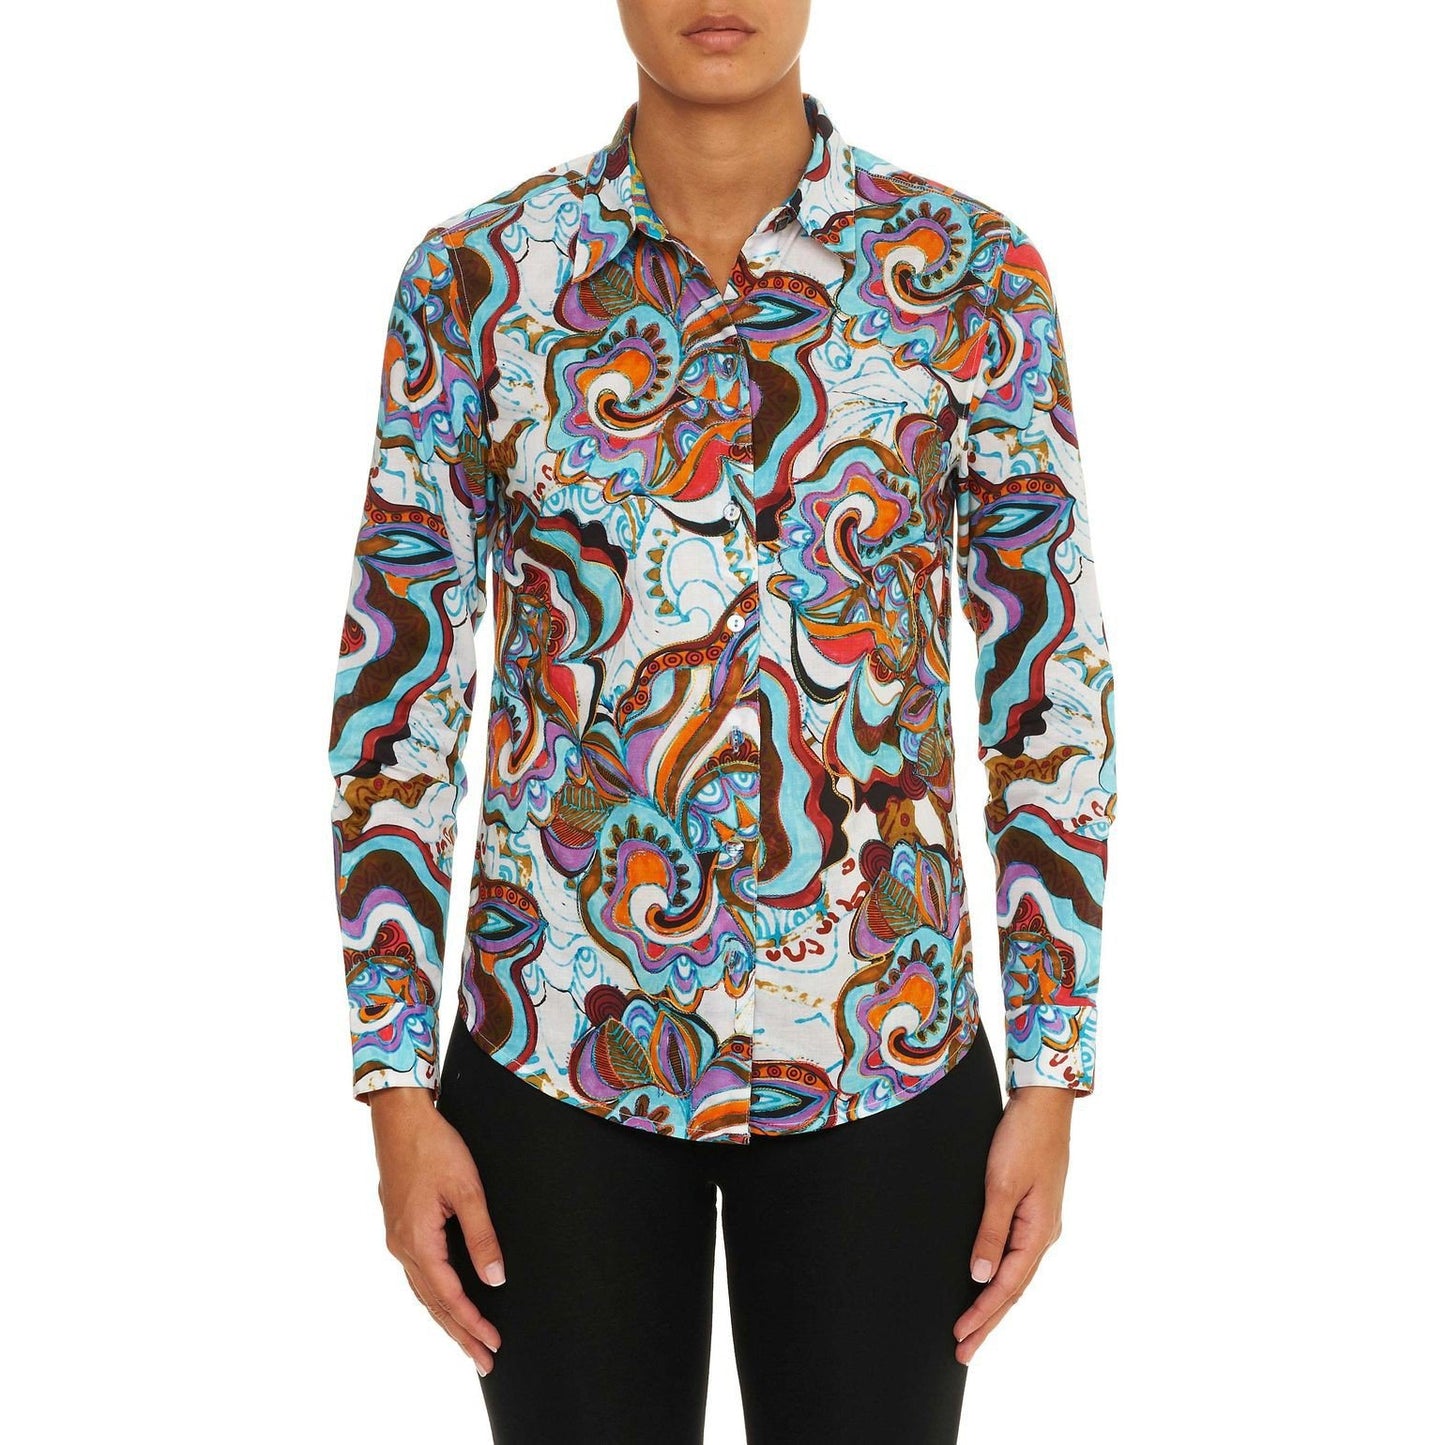 Robert graham Medium size shirt